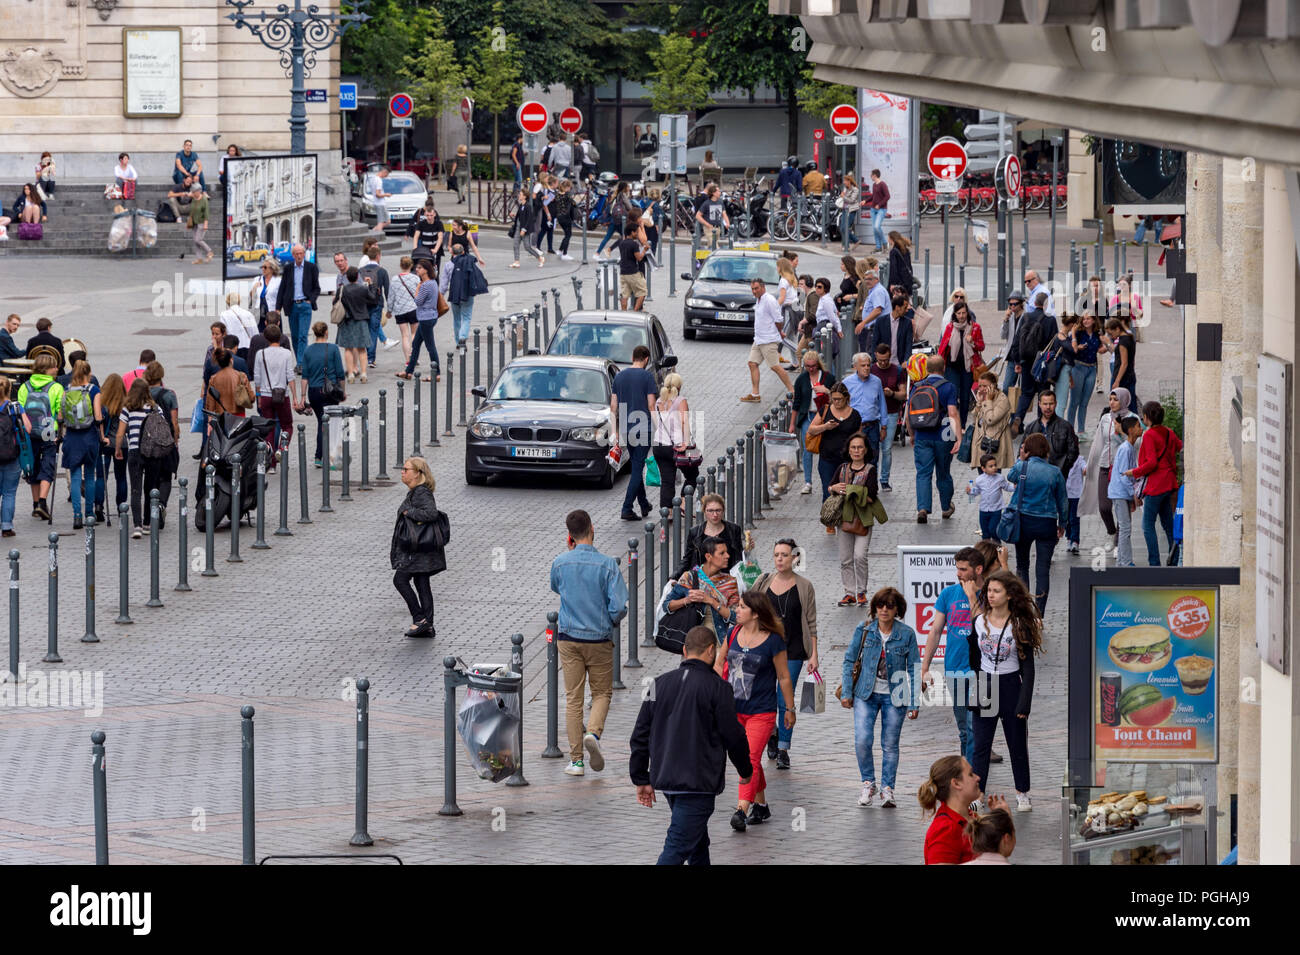 Lille, France - 15 June 2018: pedestrians walking on Rue des Manneliers street. Stock Photo